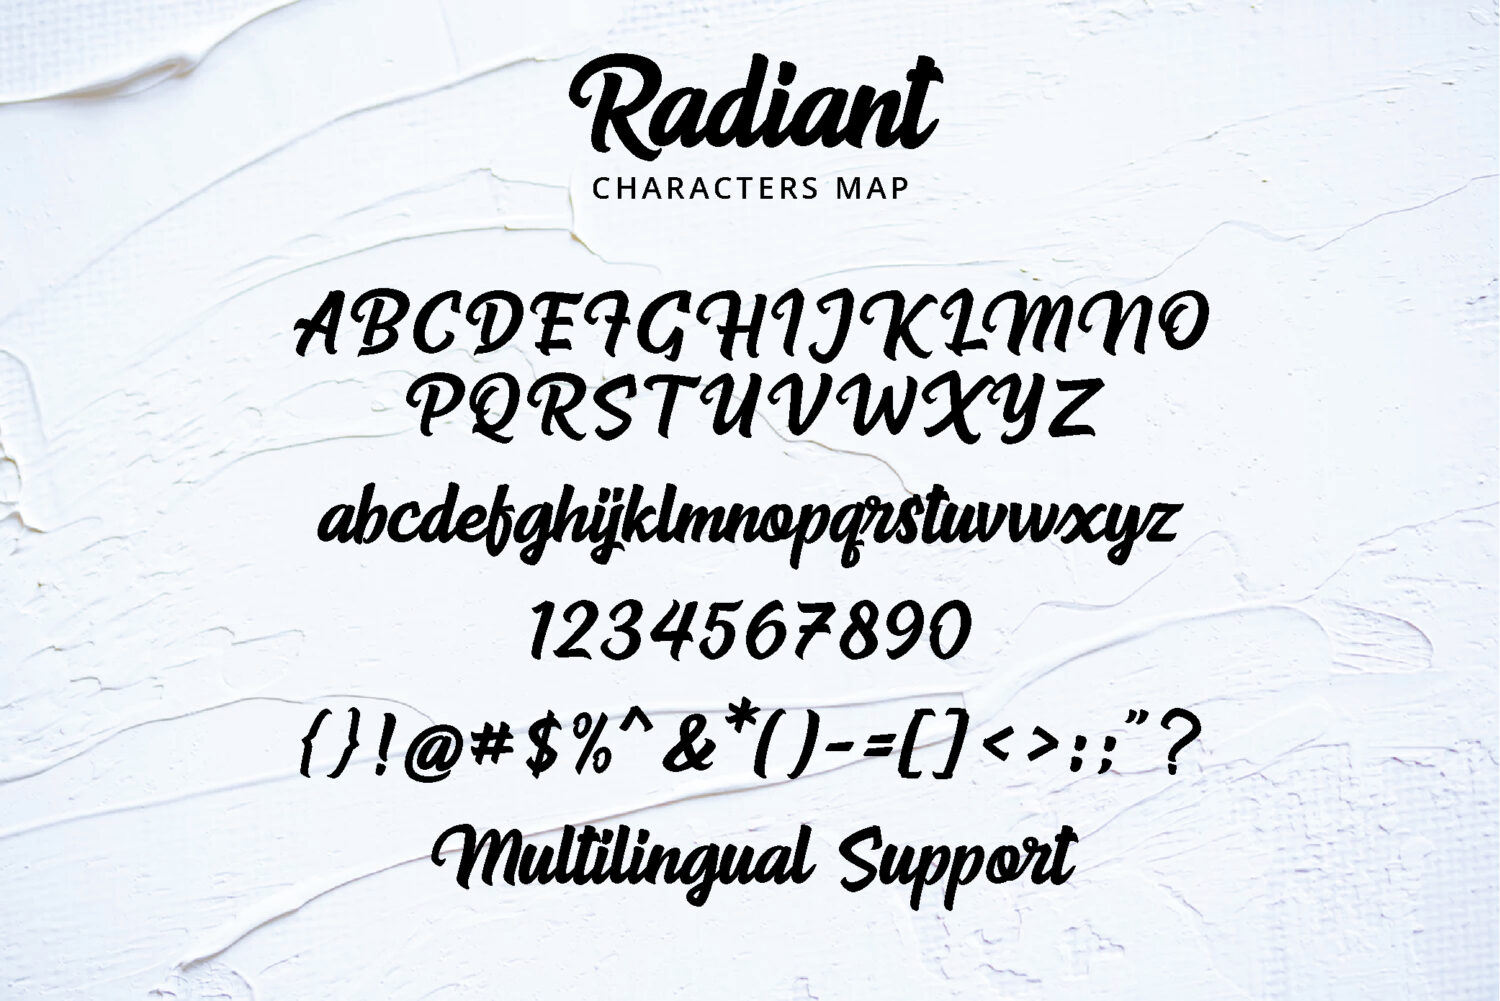 Radiant Iconic Script Free Font